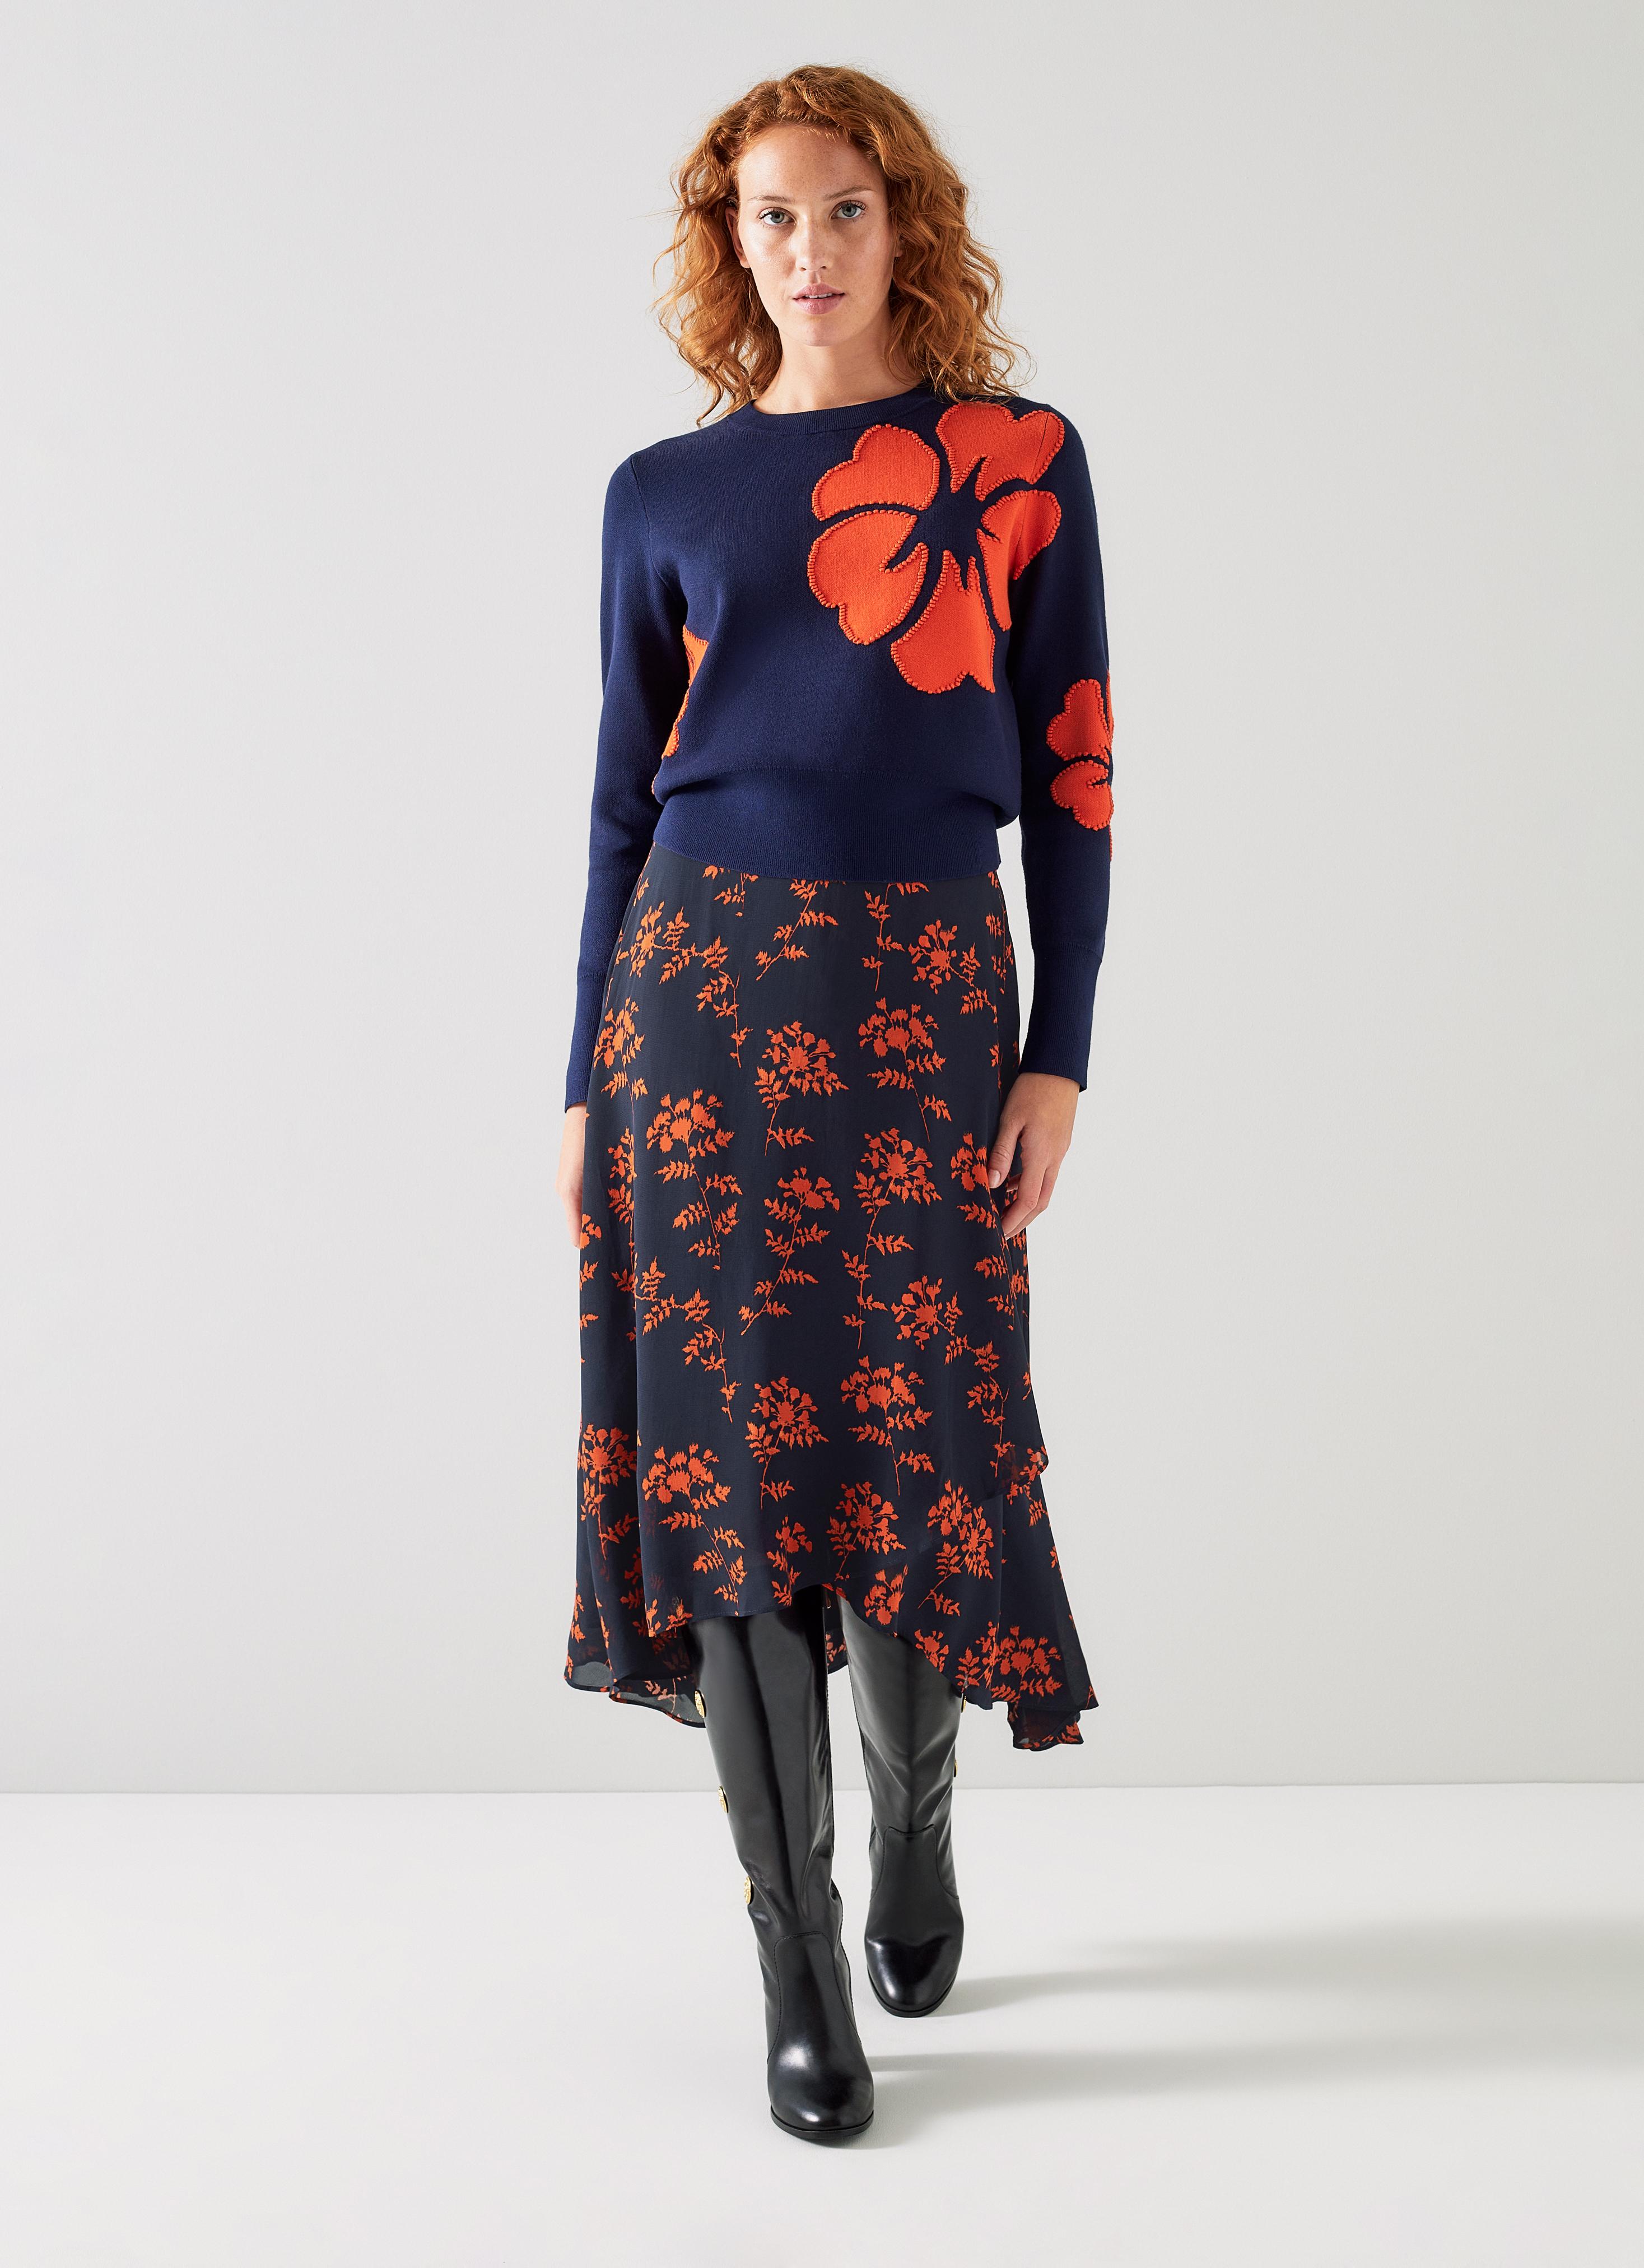 L.K.Bennett Krasner Blue And Orange Shadow Floral Print Skirt, Navy Multi